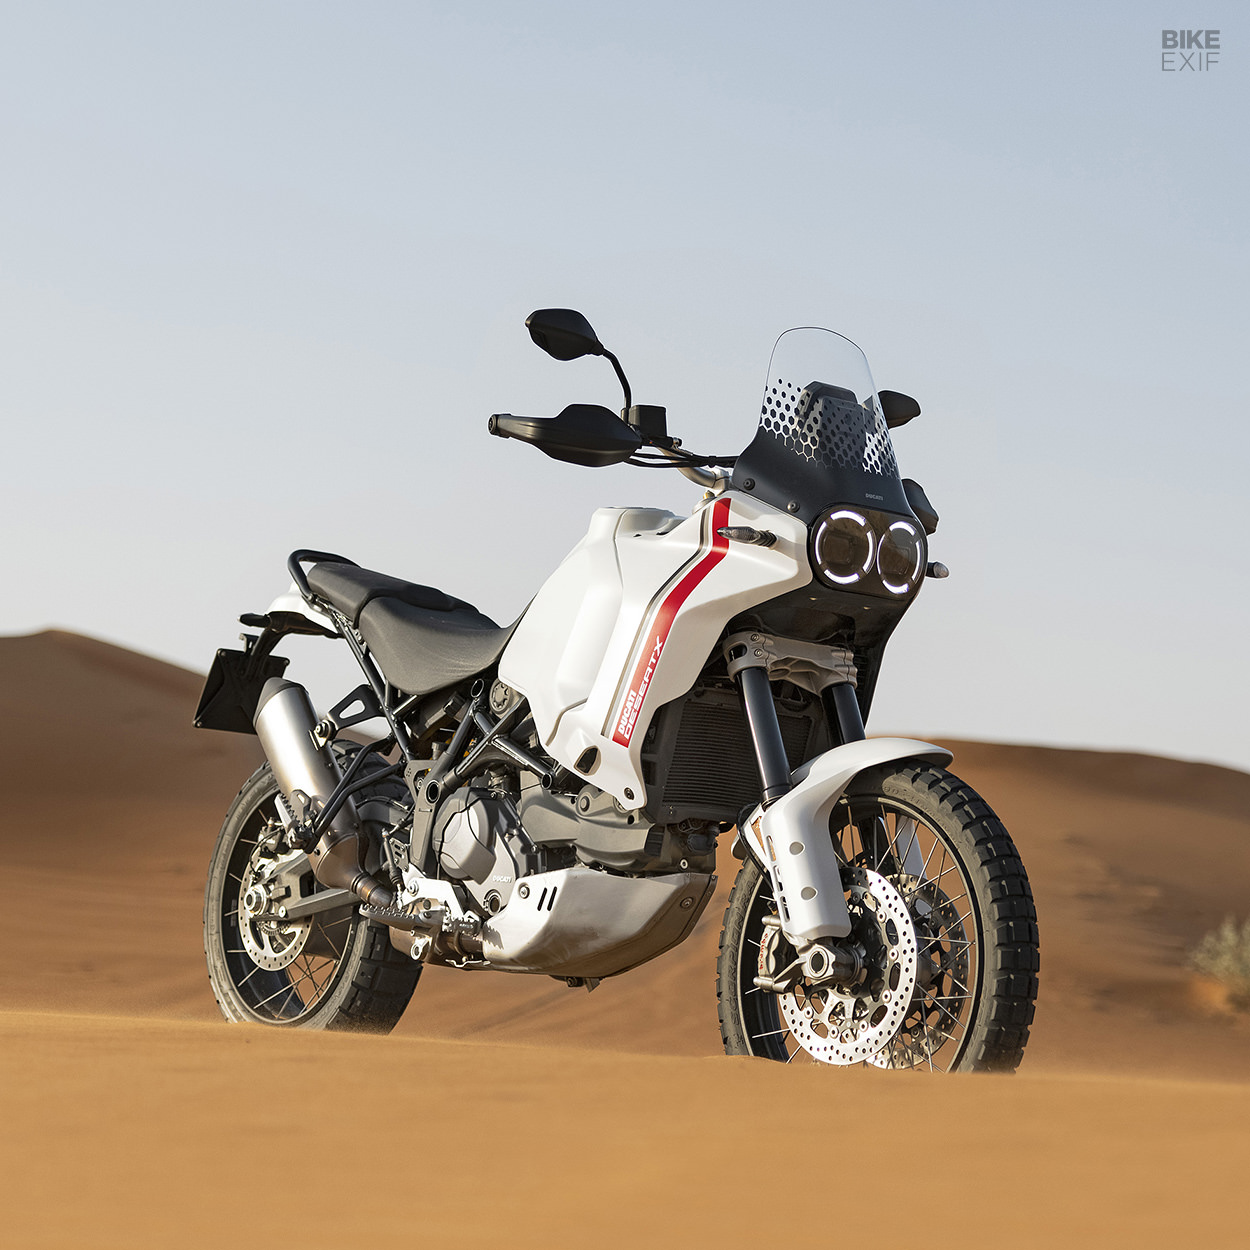 New Ducati DesertX adventure motorcycle